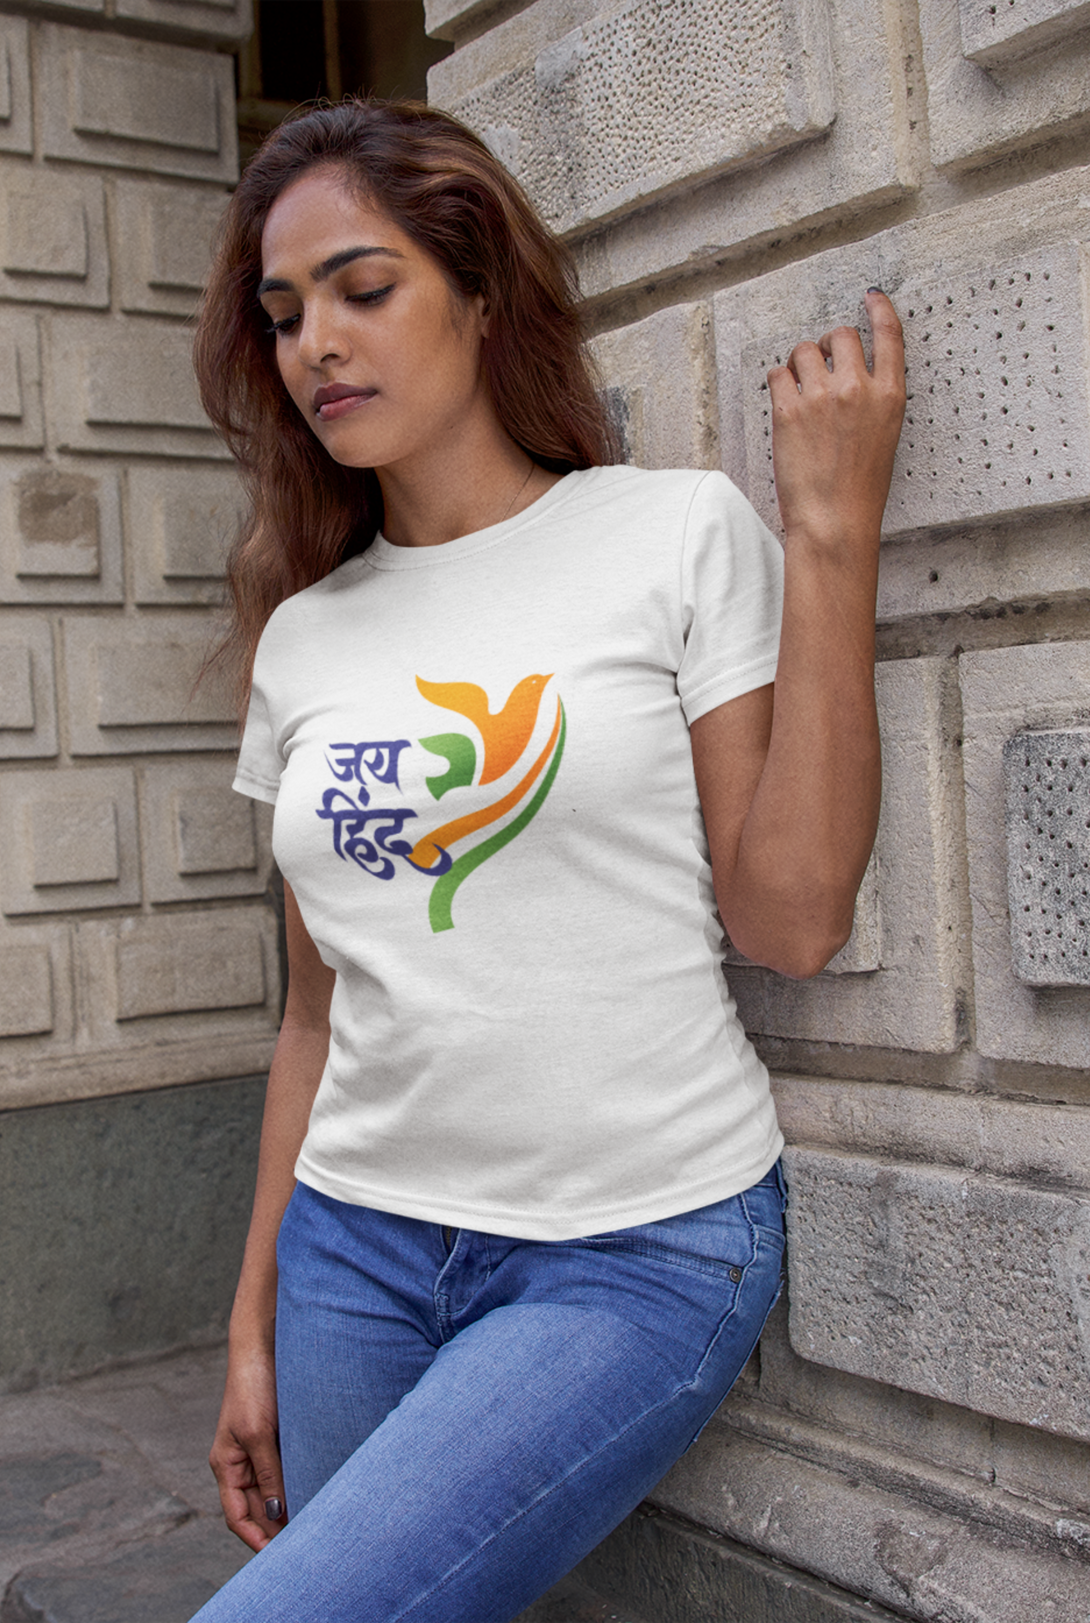 Jai Hind White Printed T-Shirt For Women - WowWaves - 6